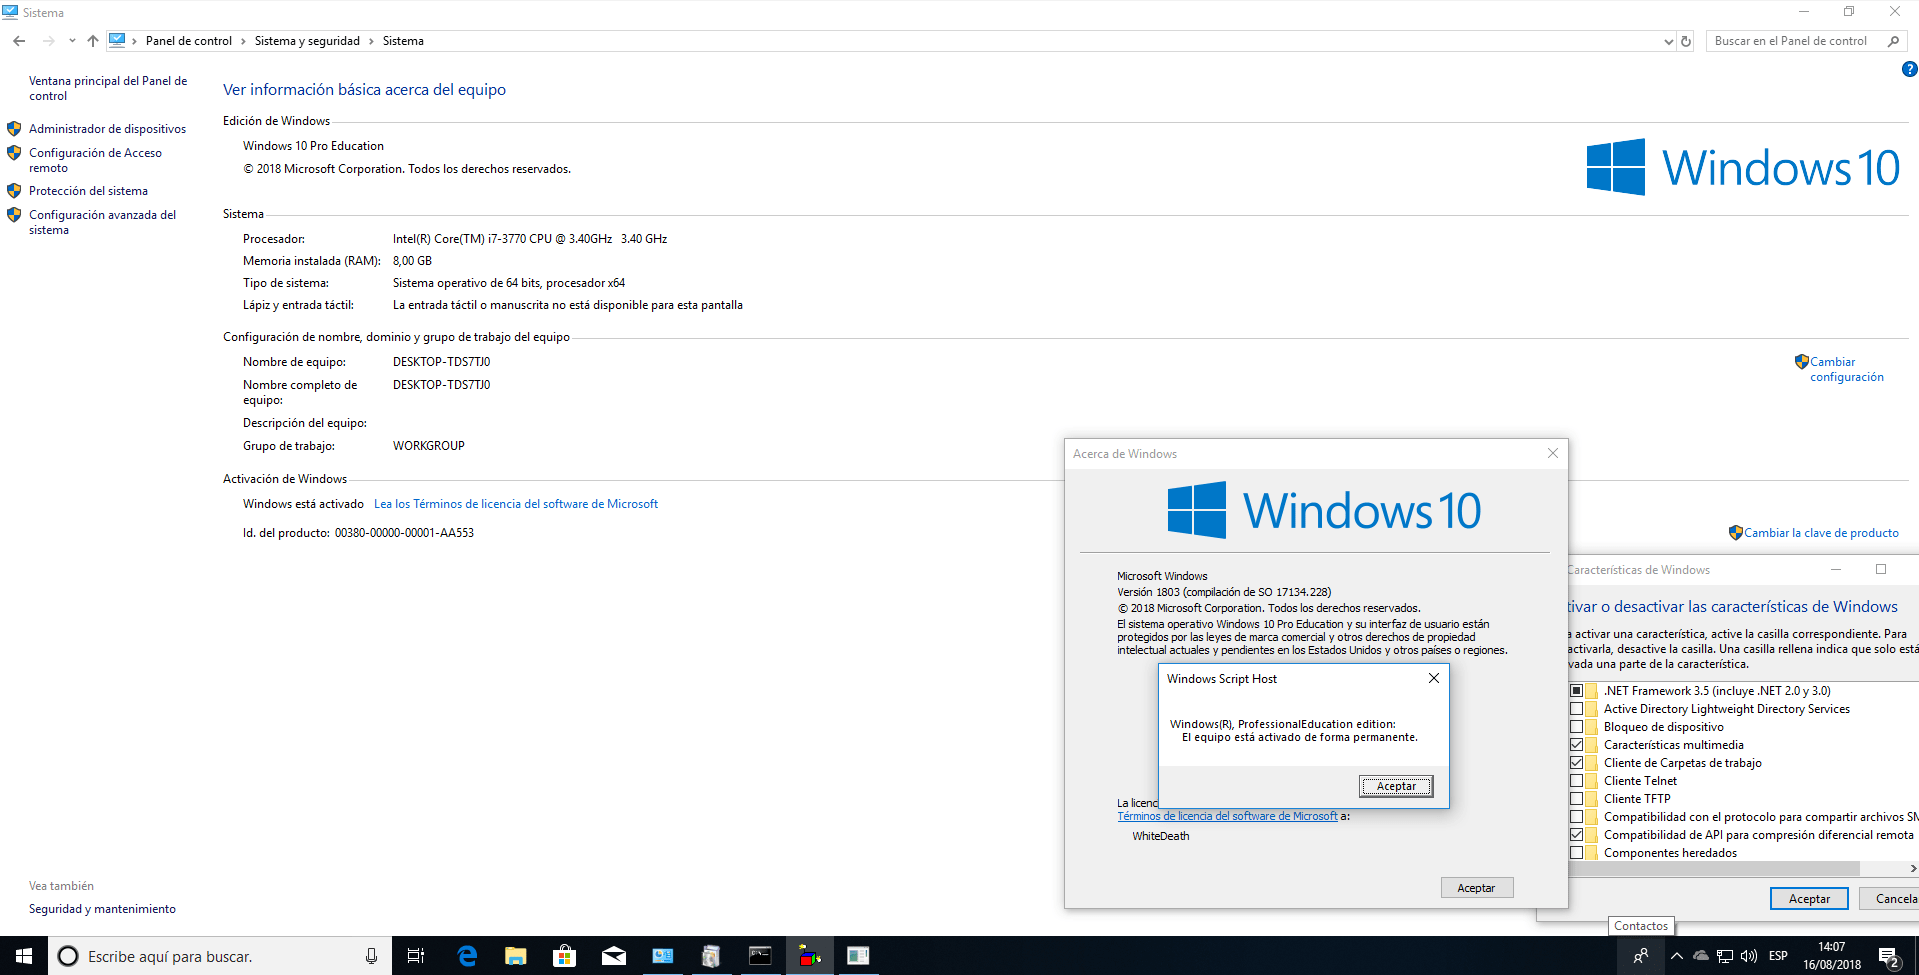 windows 10 pro 1803 lite edition v7